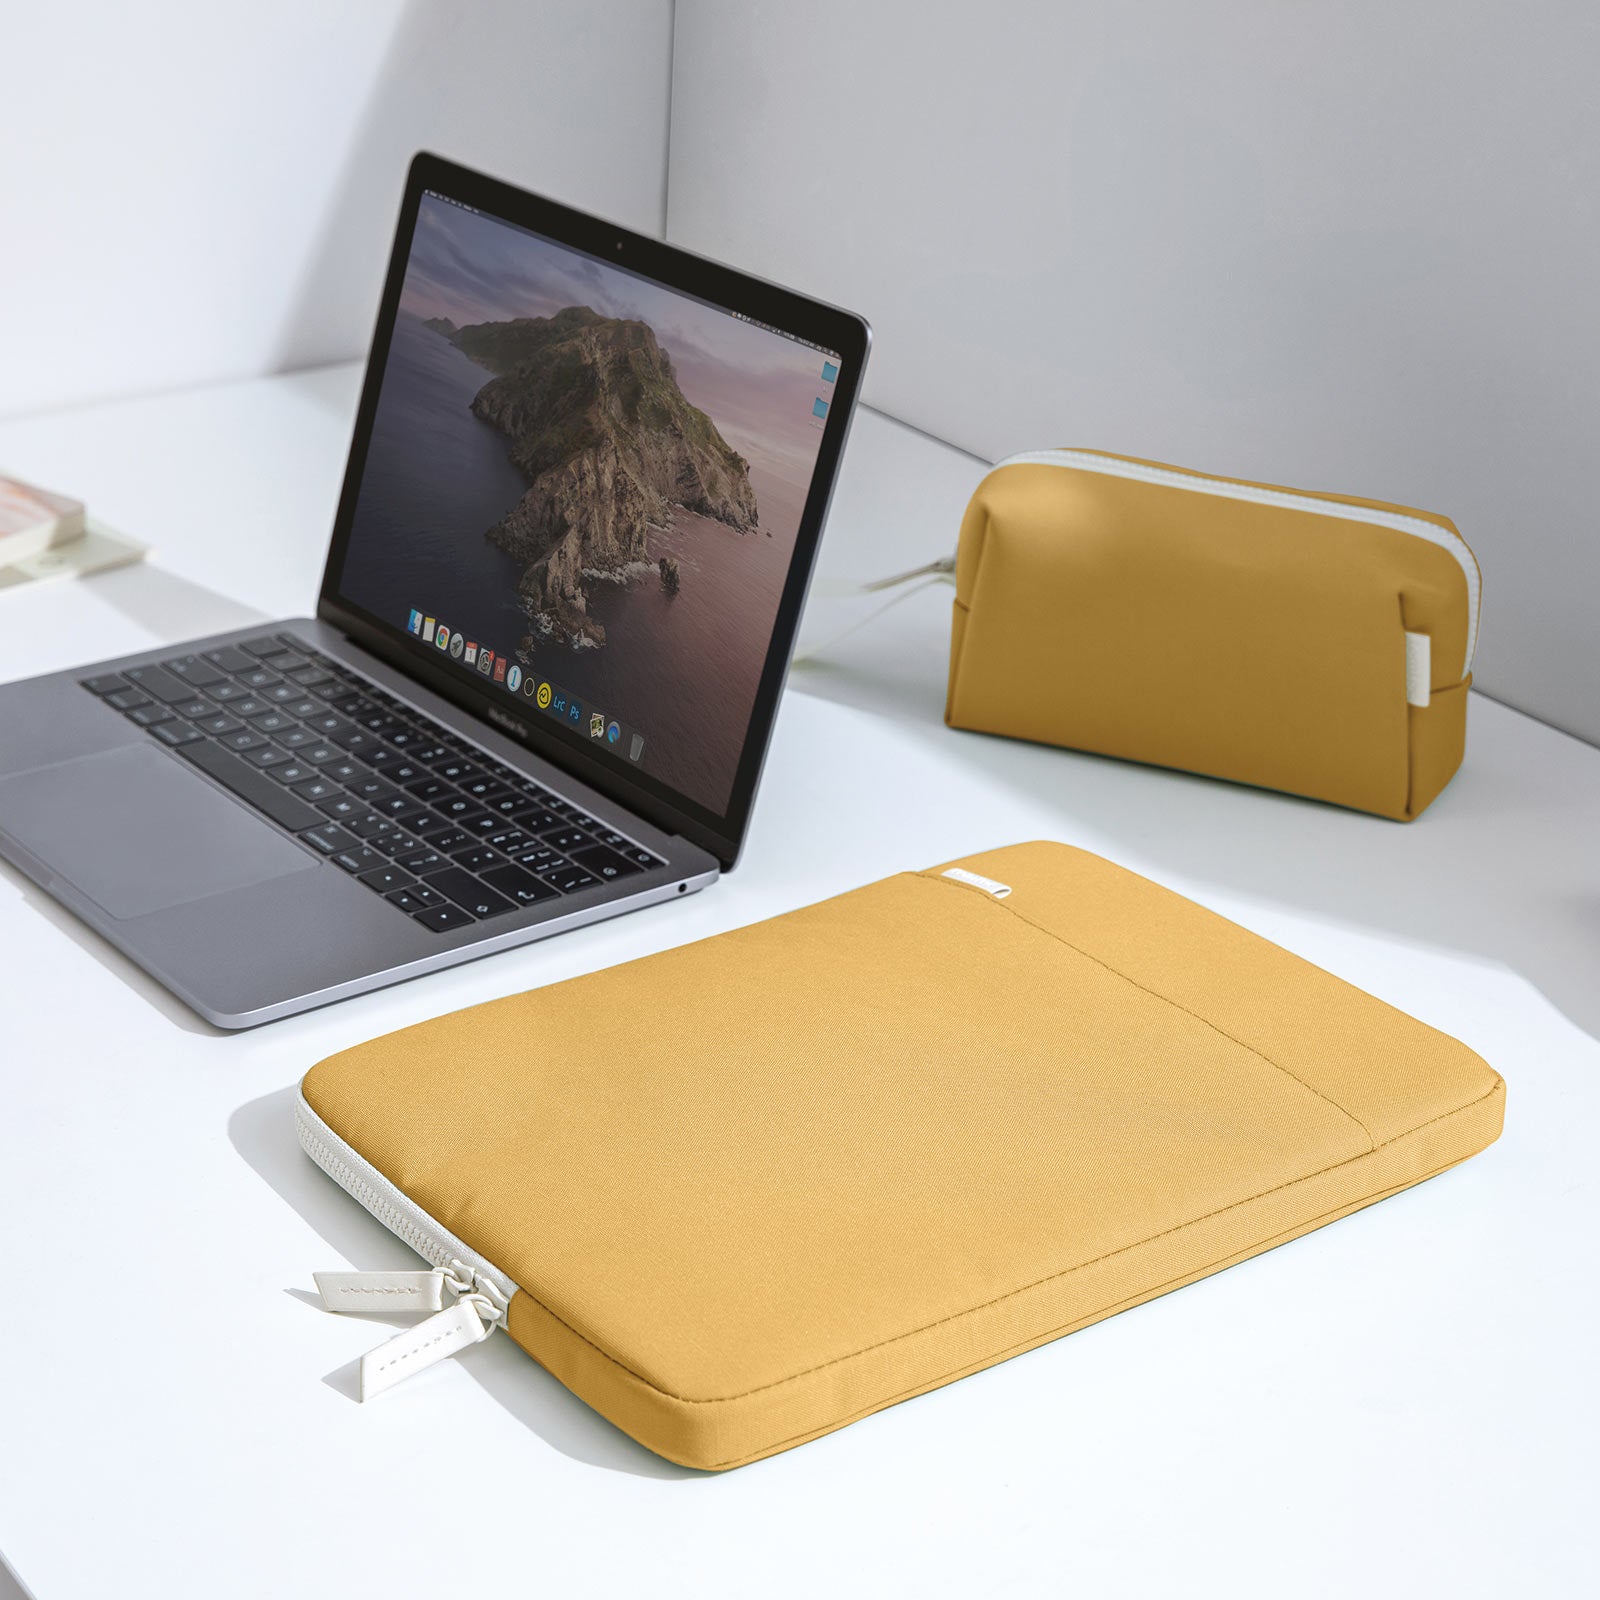 Vertrouwen op Vergadering bestuurder The Her-A23 Jelly Laptop Sleeve Kit for 13-inch MacBook Air | Maize Ye